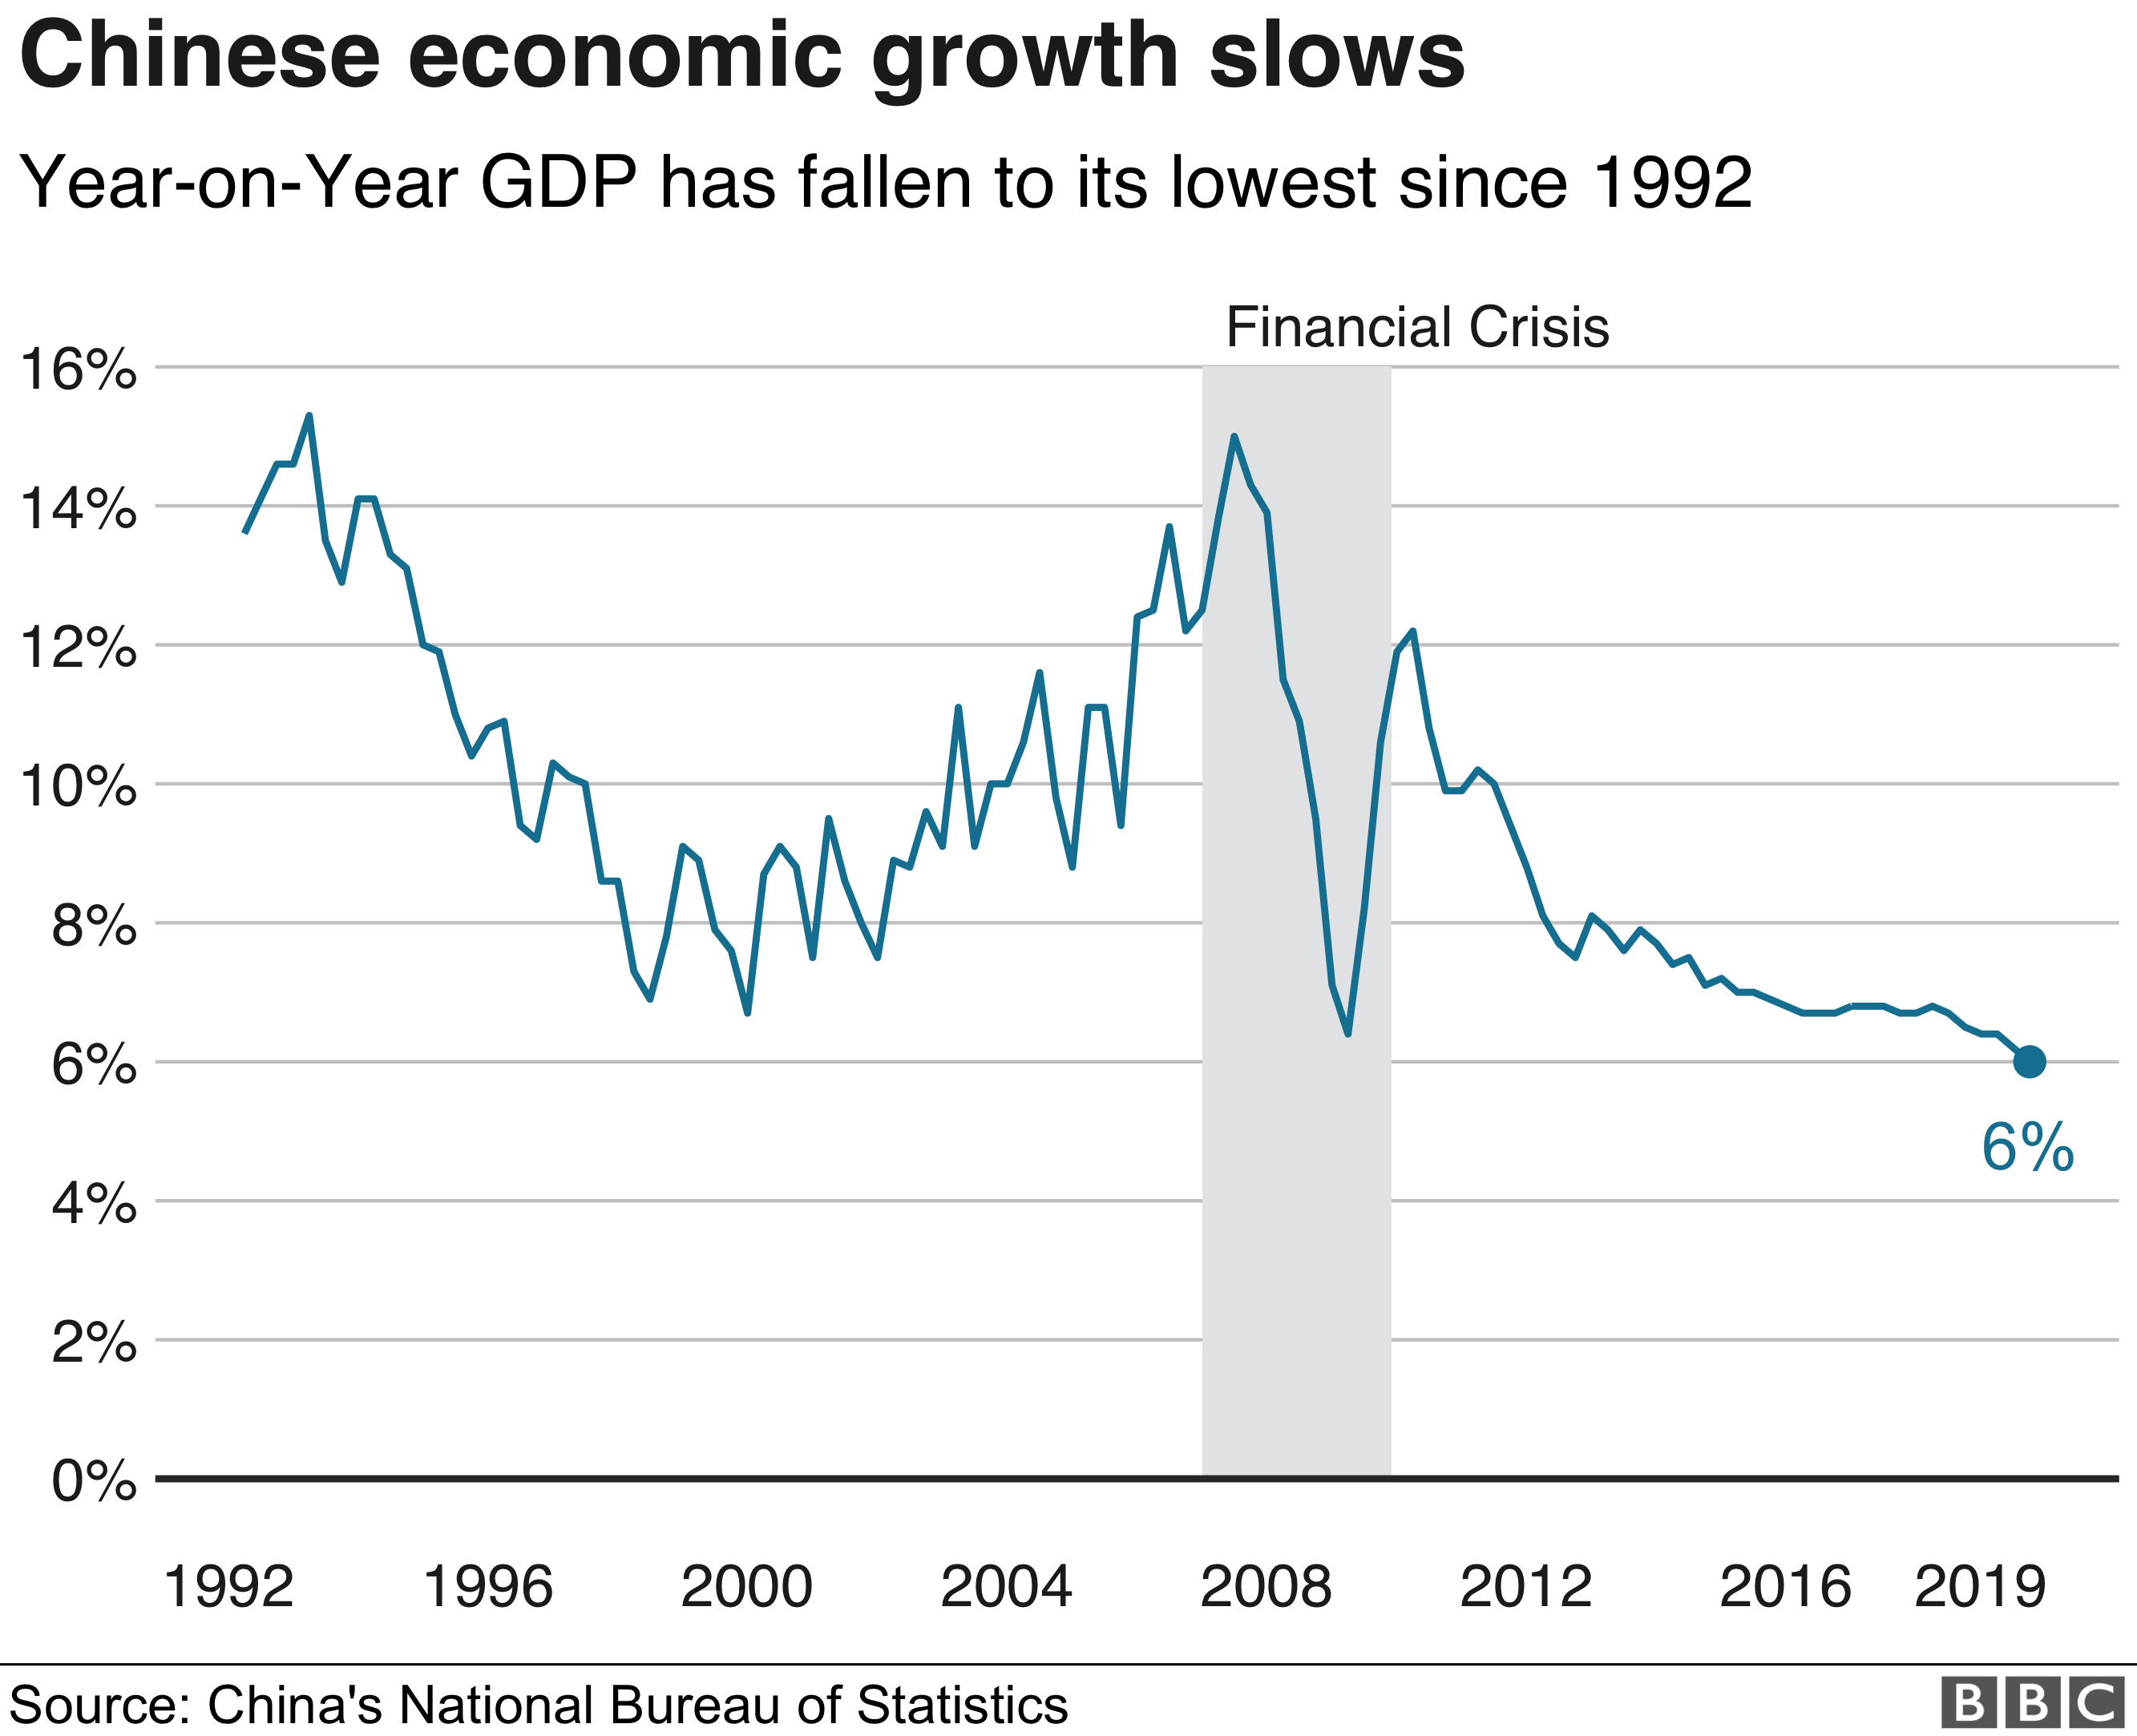 Economic Chart 2008